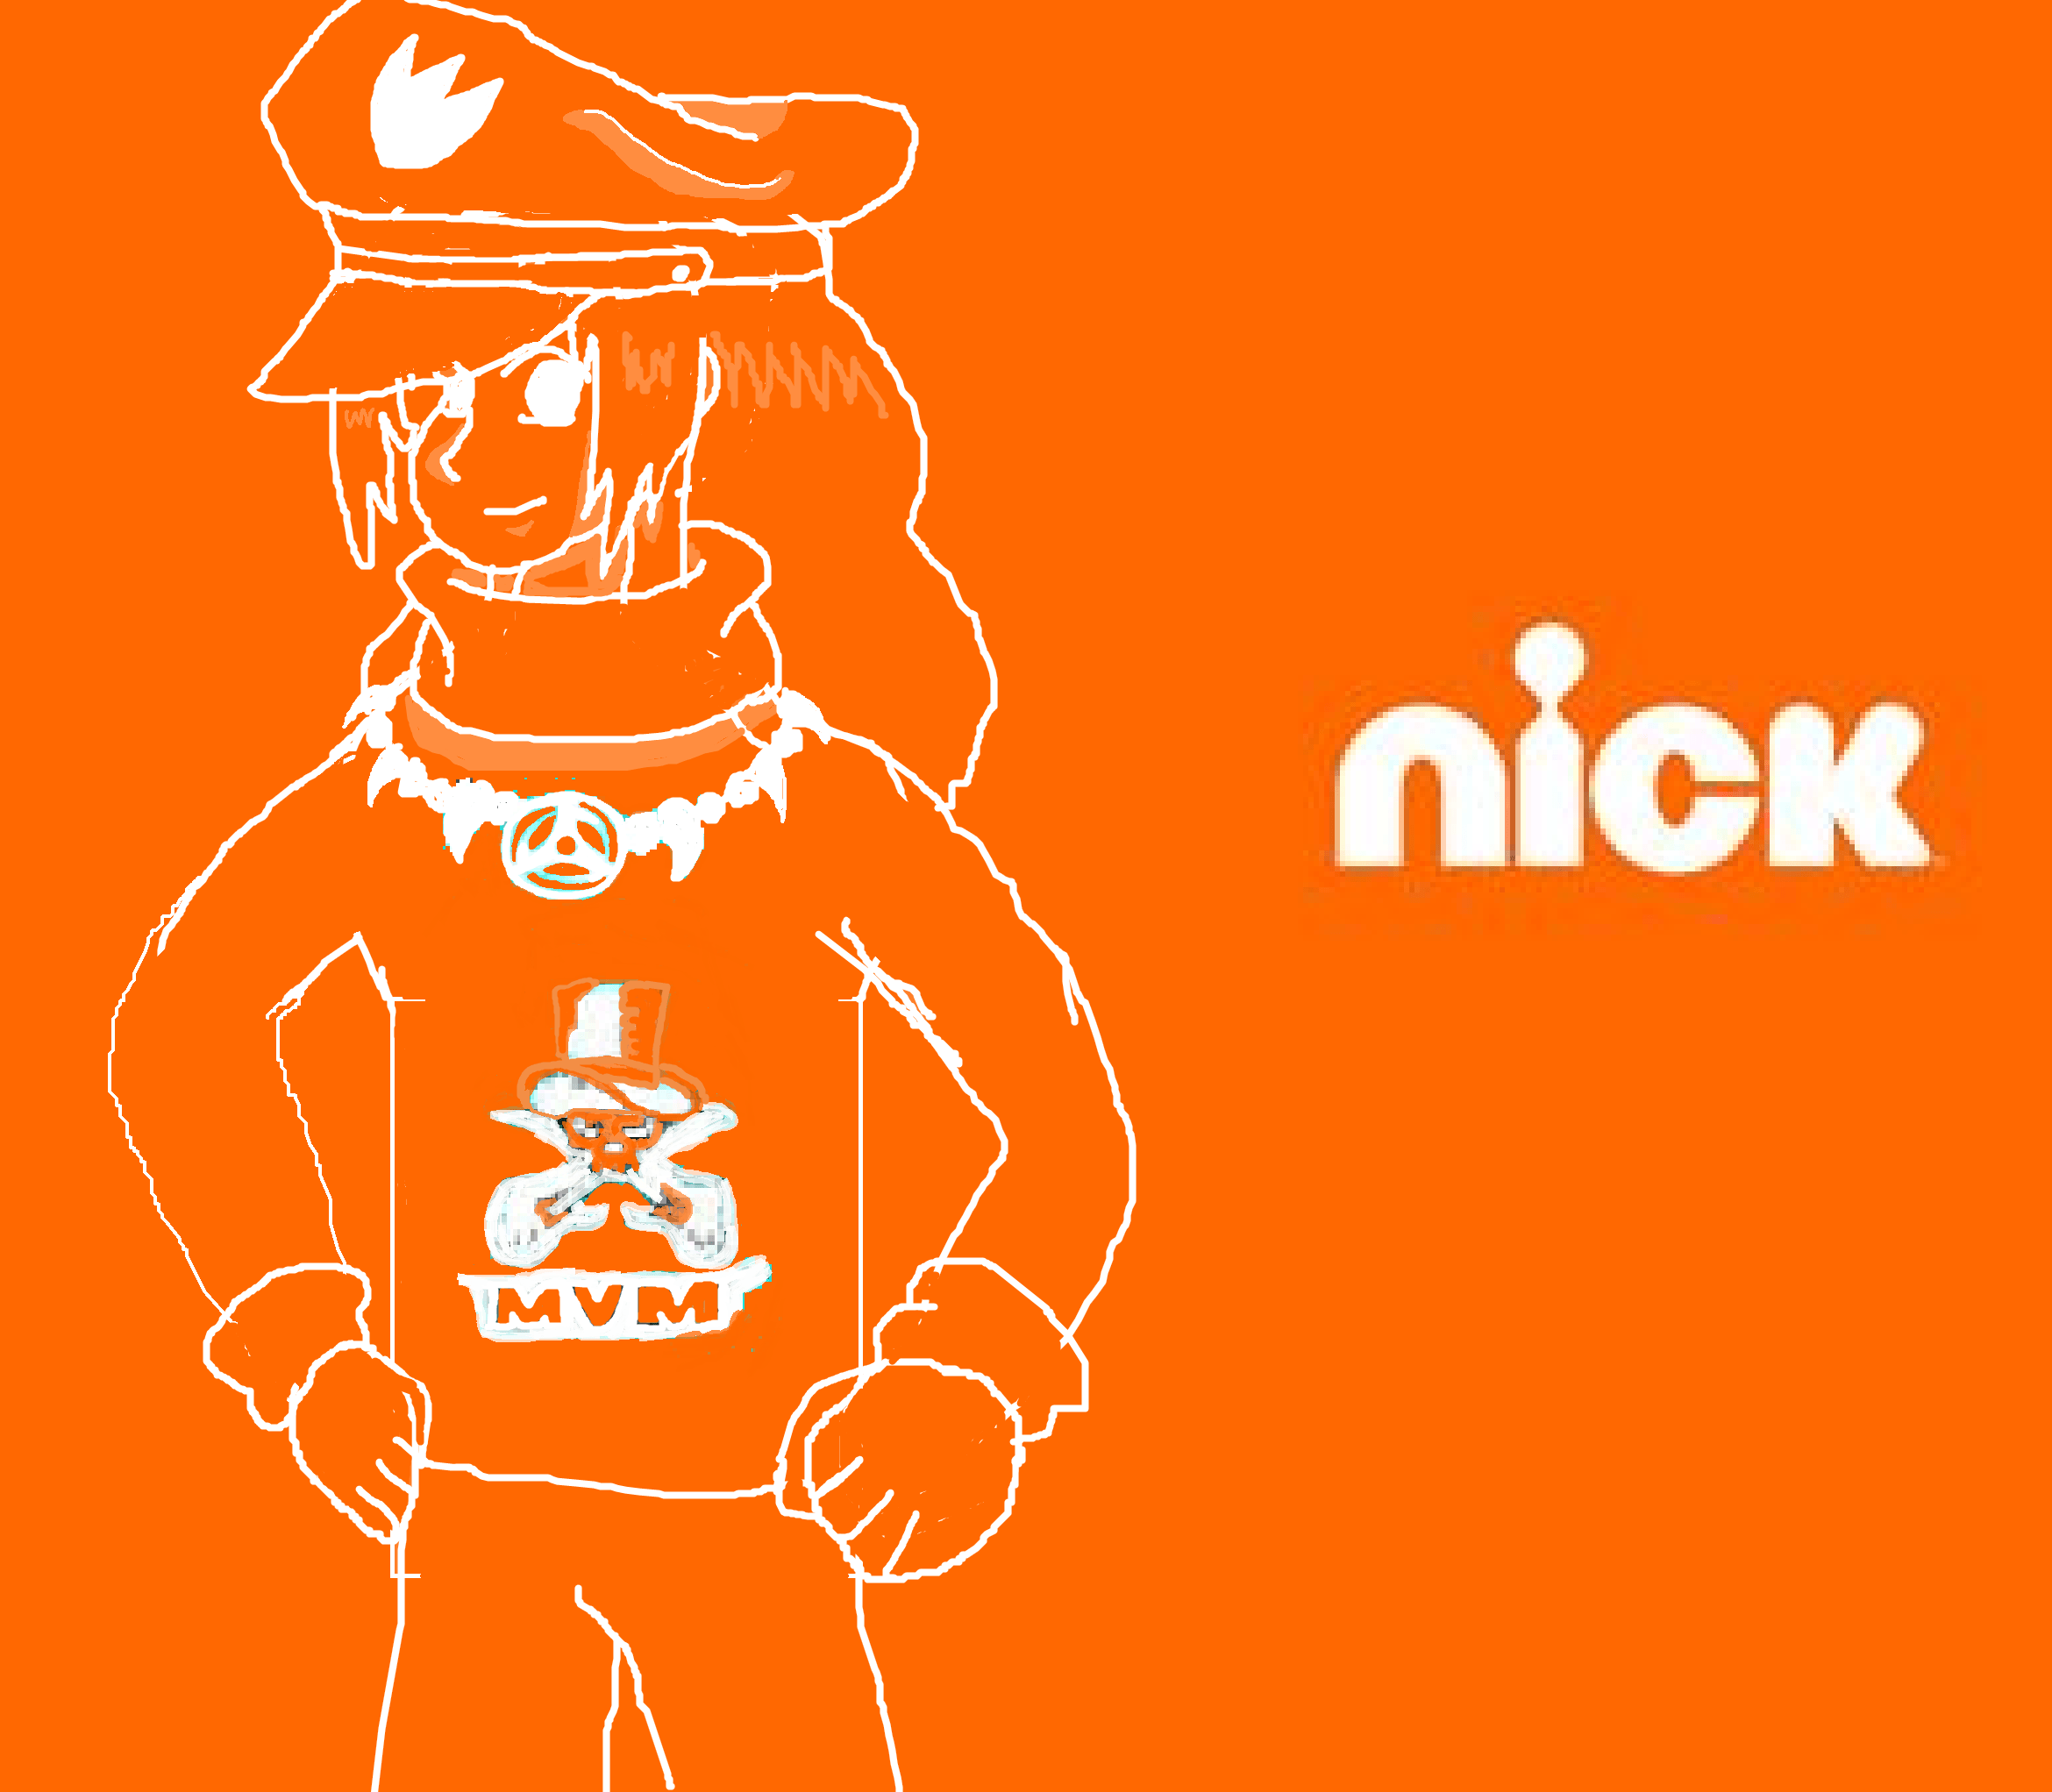 Nickelodeon Top Logo - Nickelodeon Shows. Mitchell Van Morgan's Nickelodeon Logos. Vans